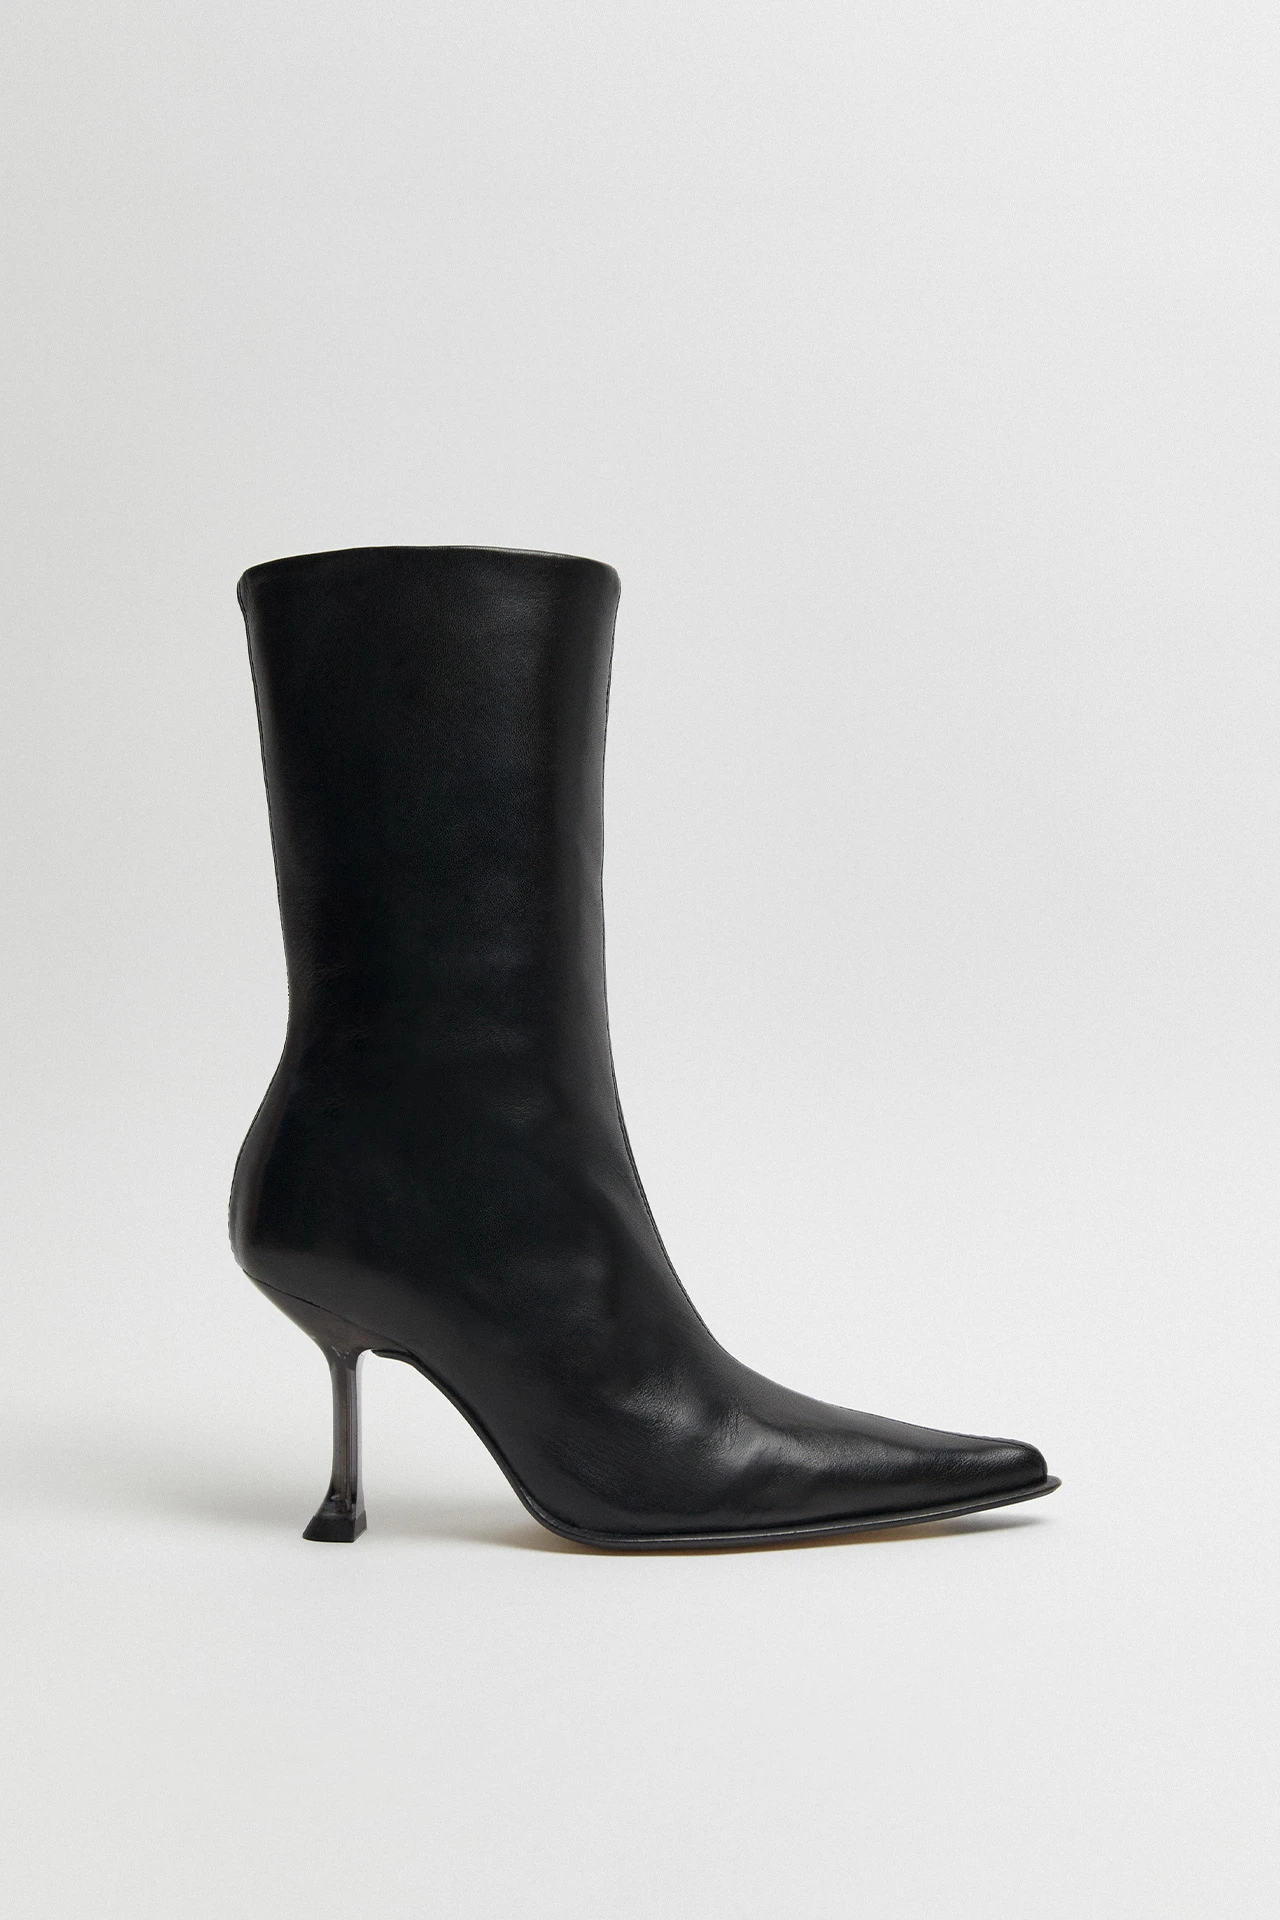 Miista-marcela-black-boots-01